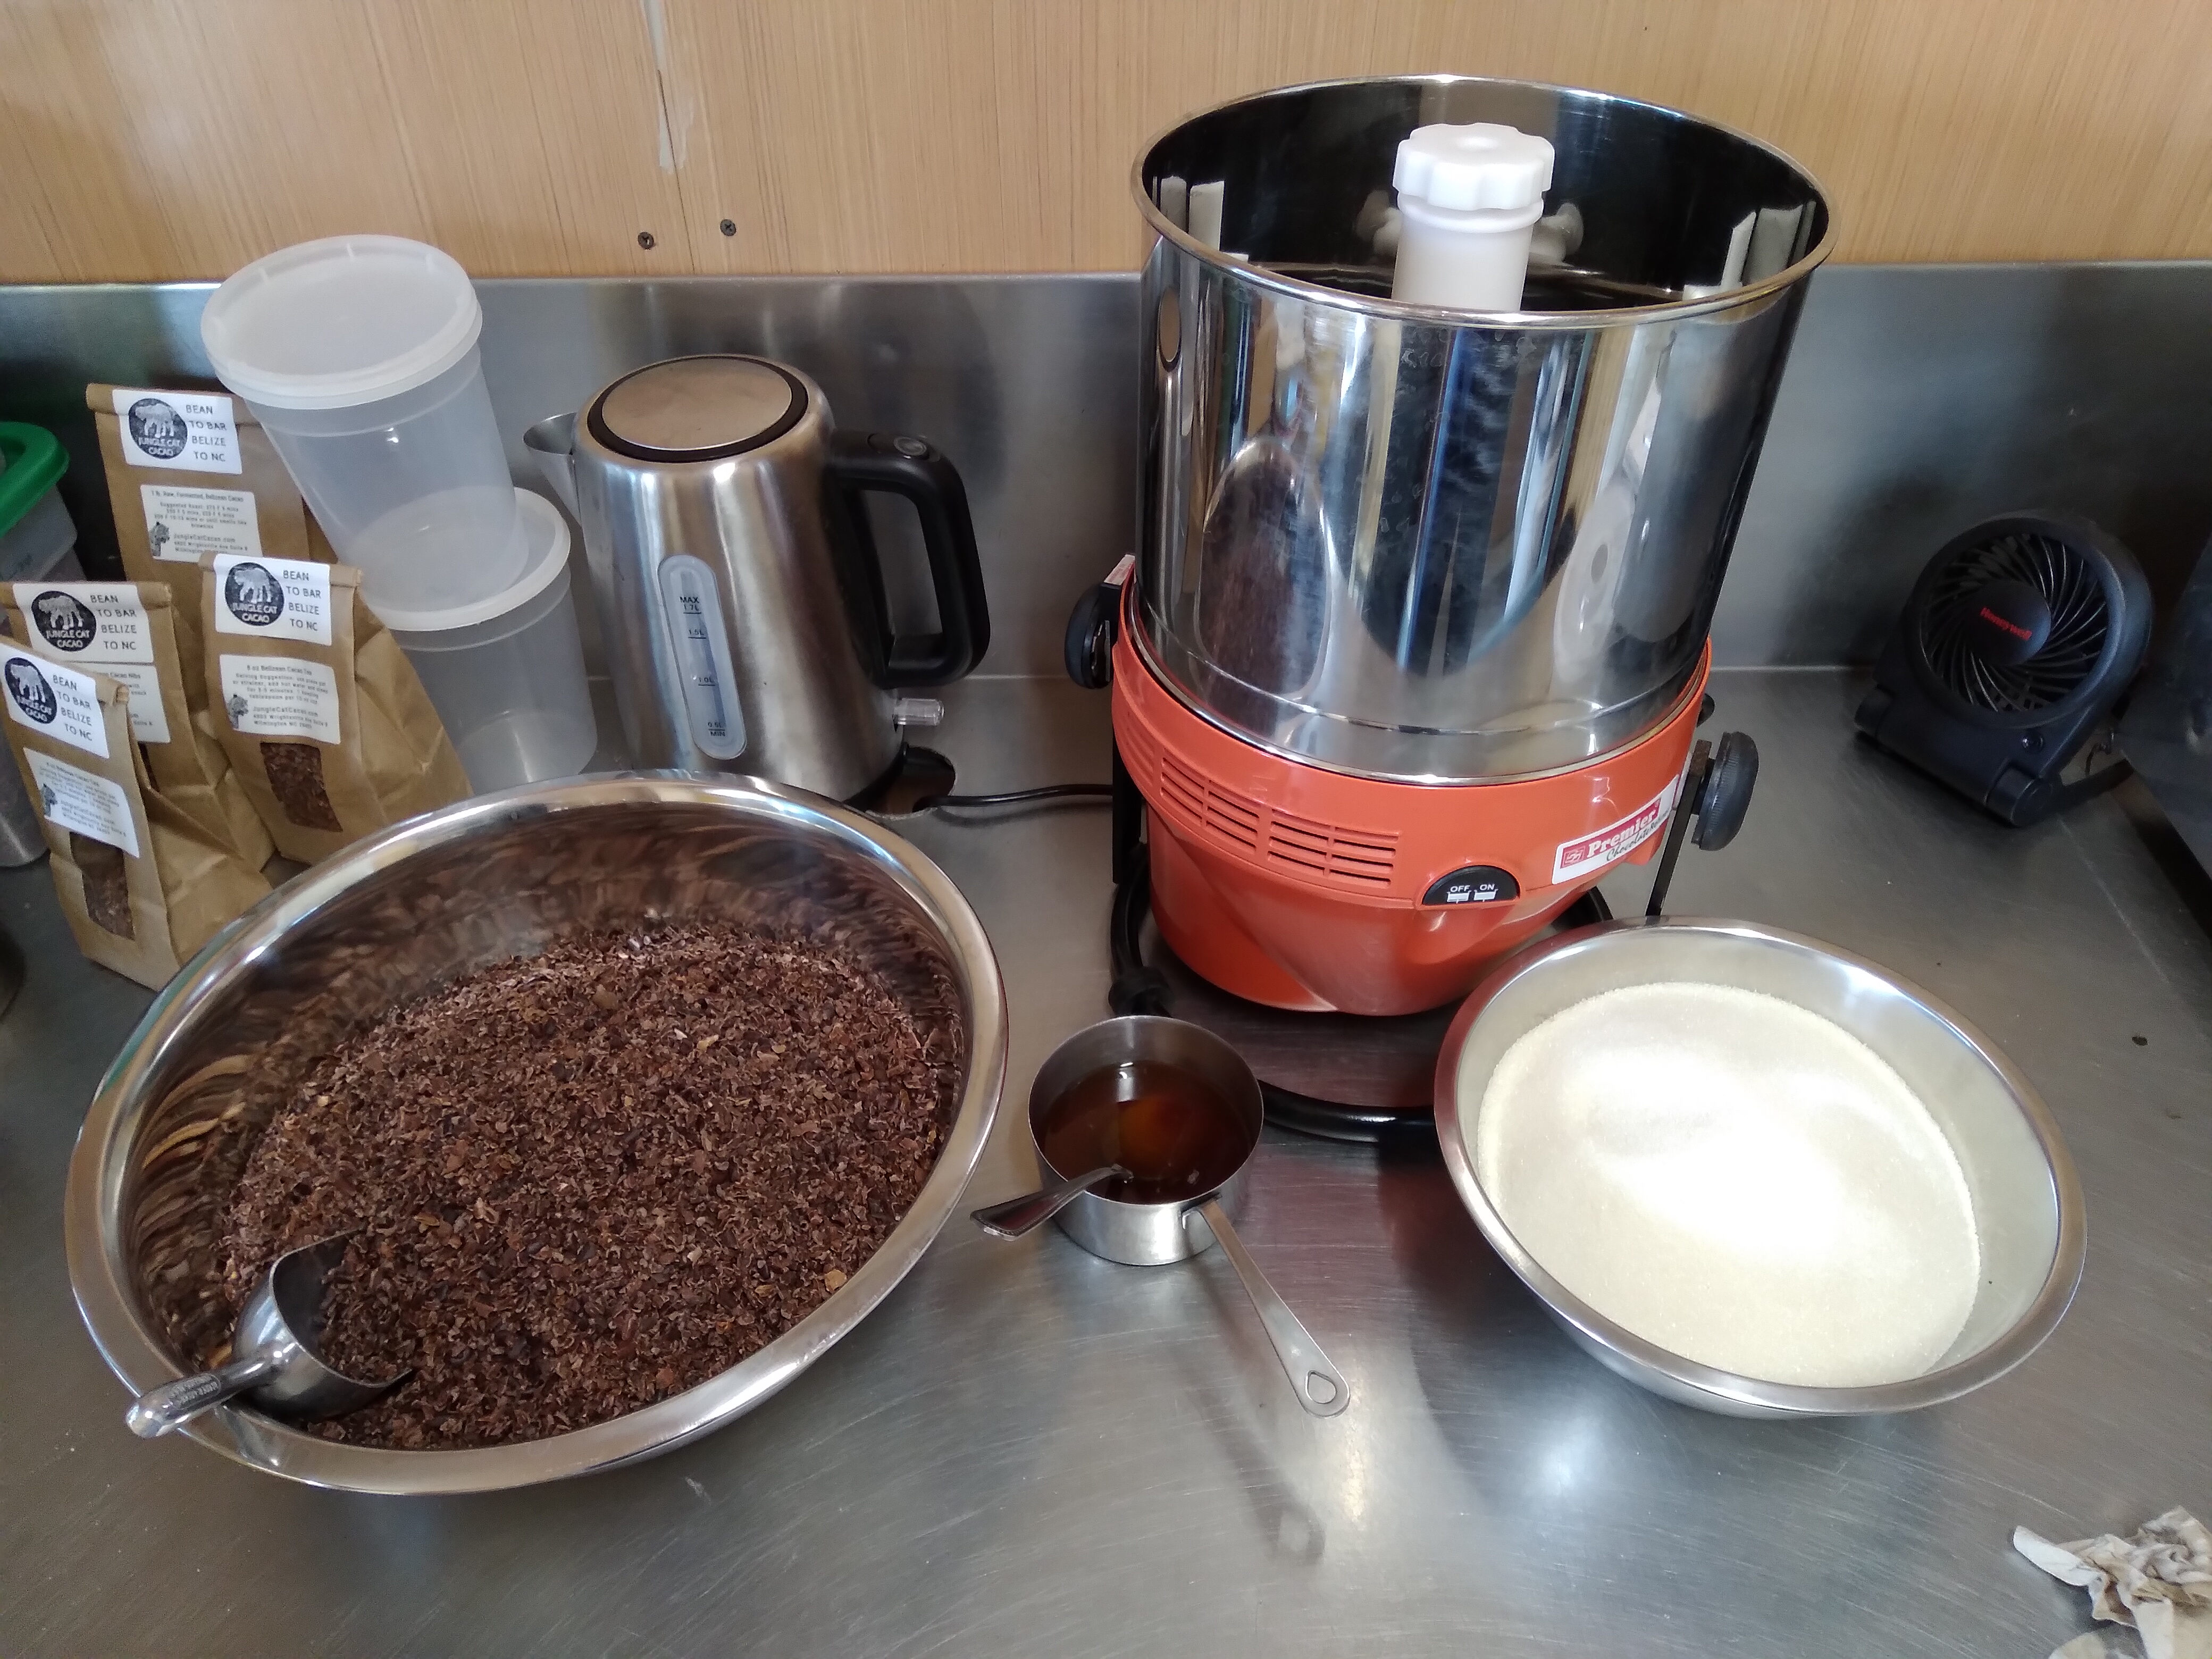 Belizean Cacao, Belizean Cocoa Butter, and Unrefined Cane Sugar